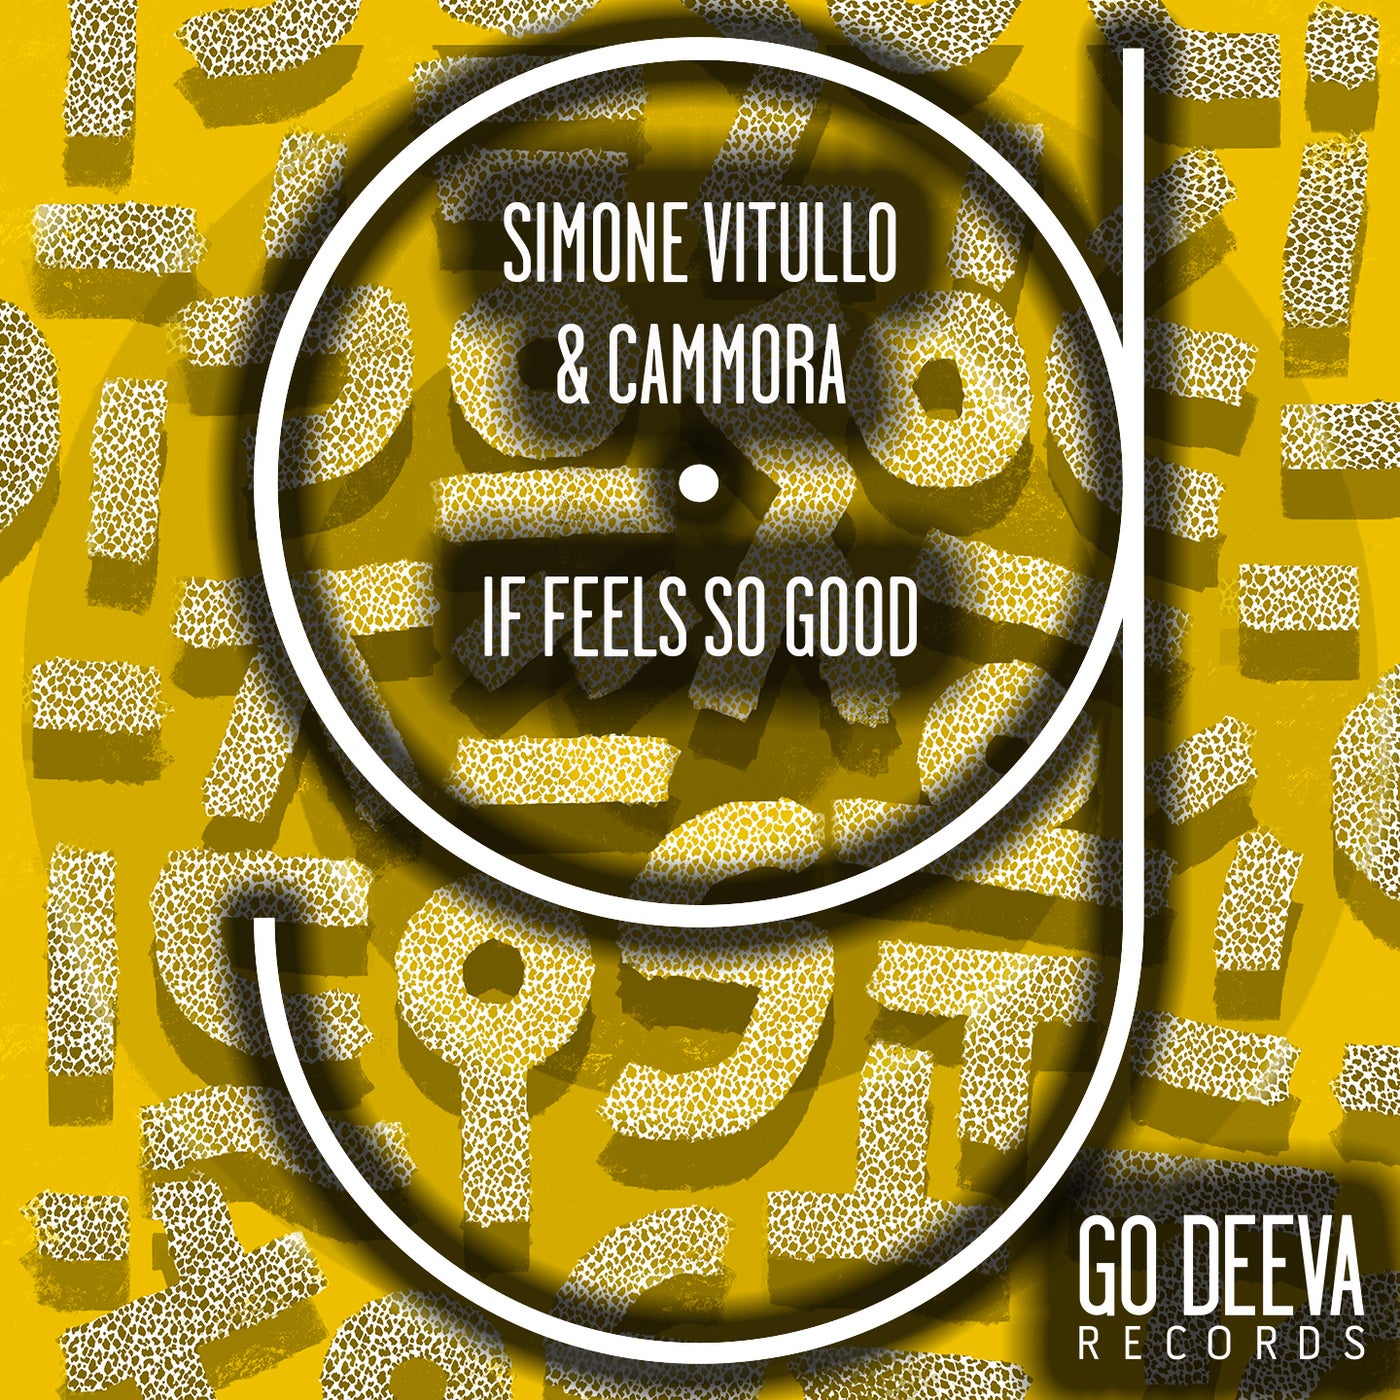 image cover: Simone Vitullo, Cammora - If Feels So Good on Go Deeva Records